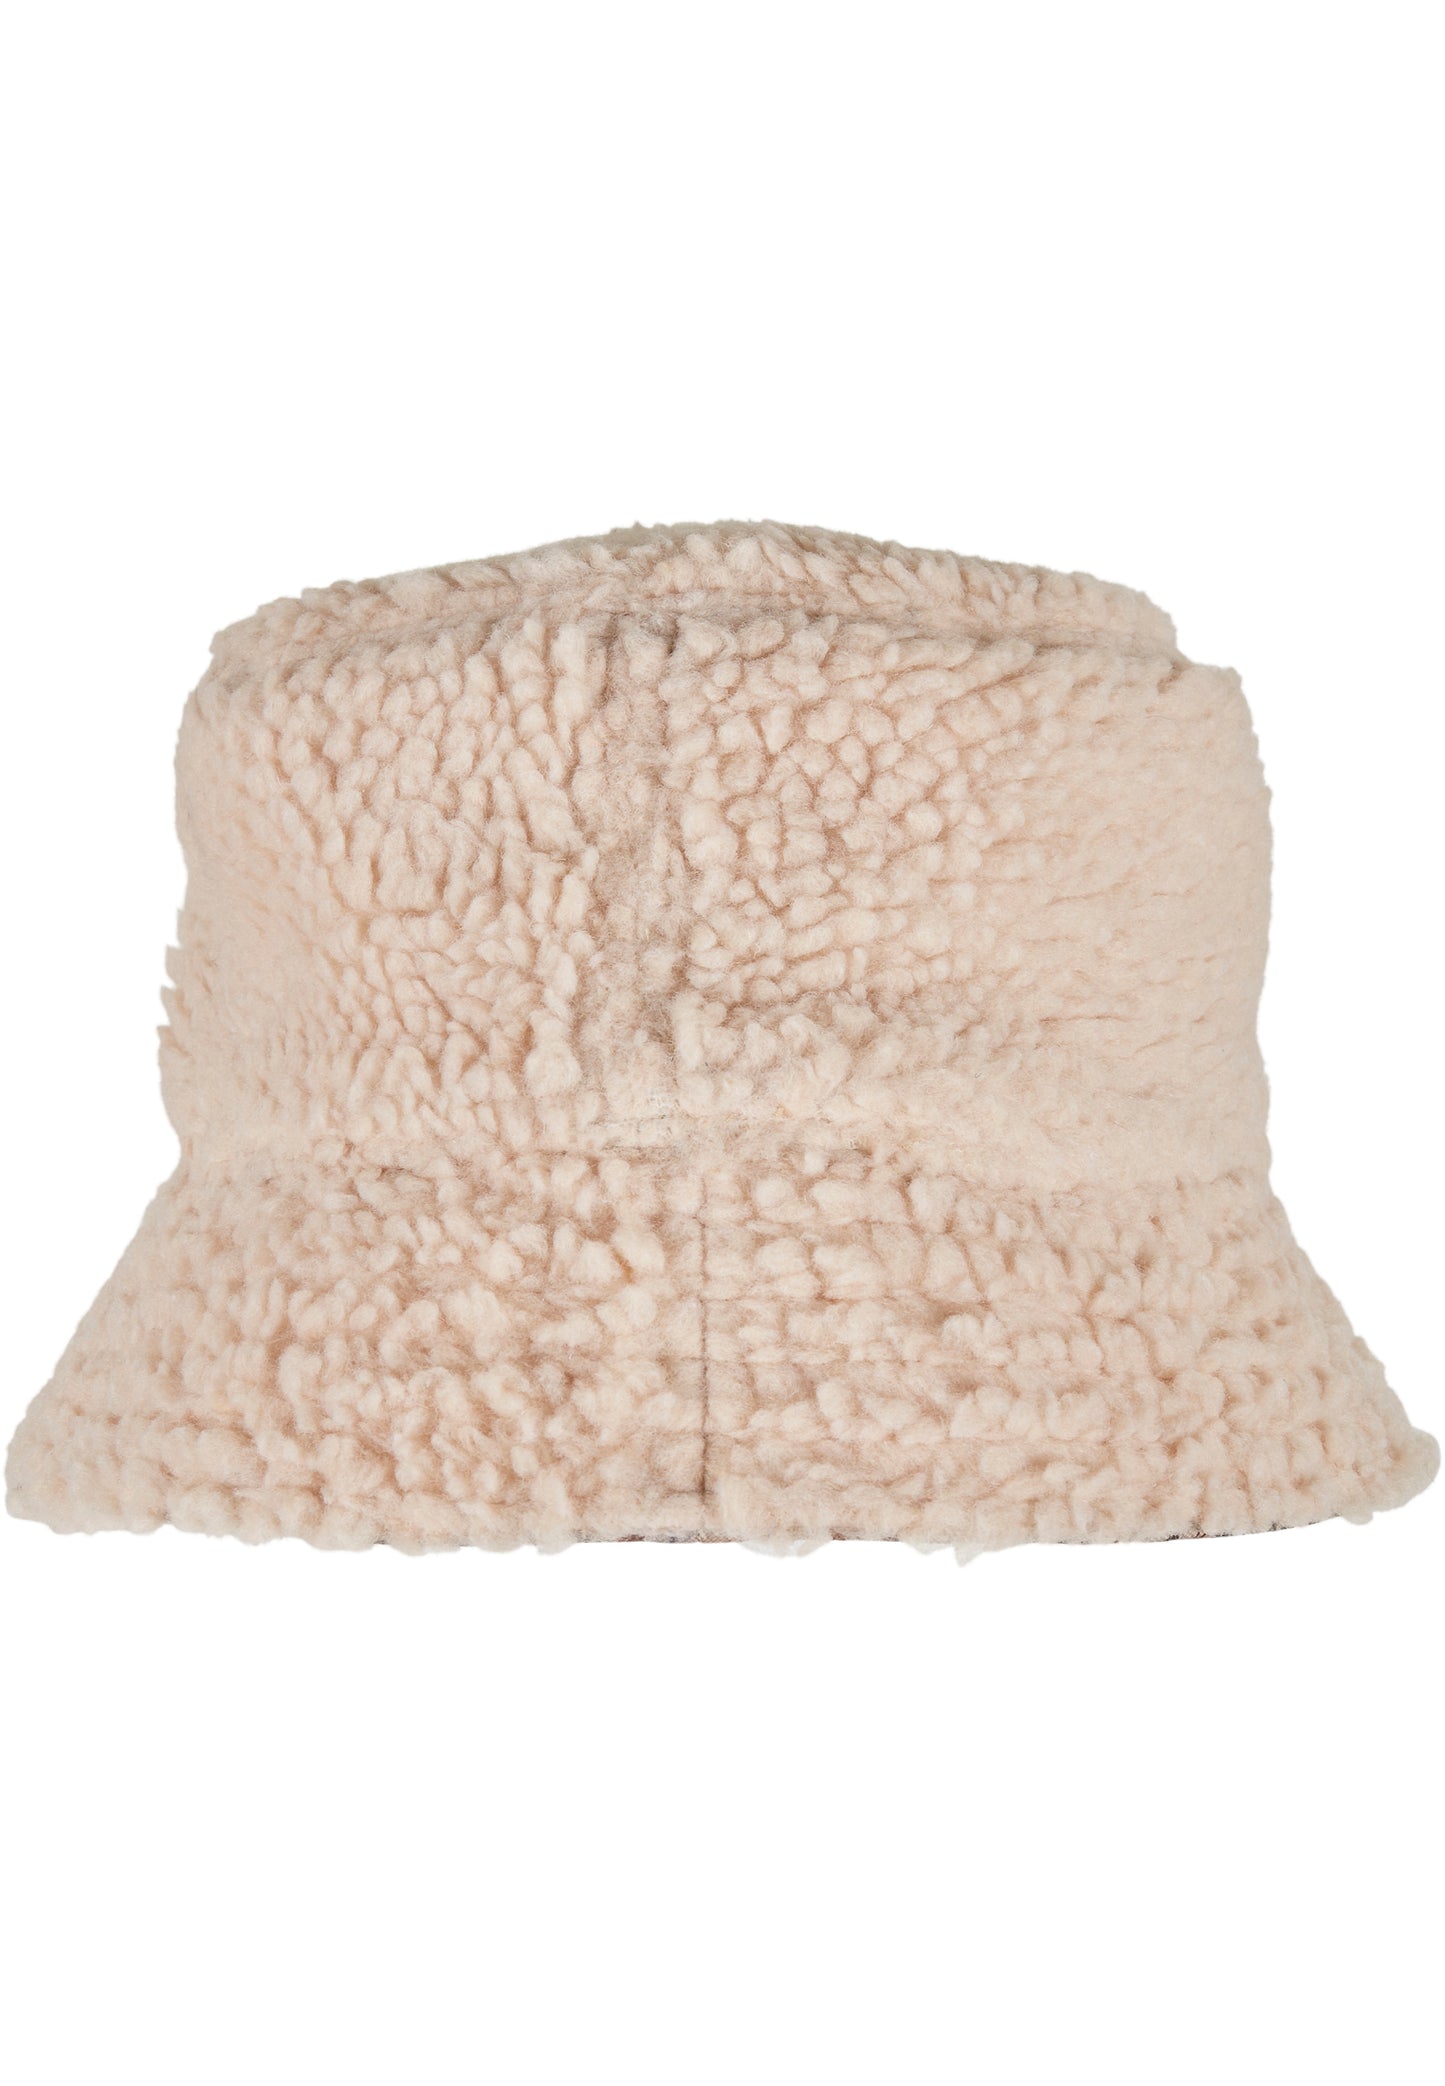 Sherpa Real Tree Camo Reversible Bucket Hat